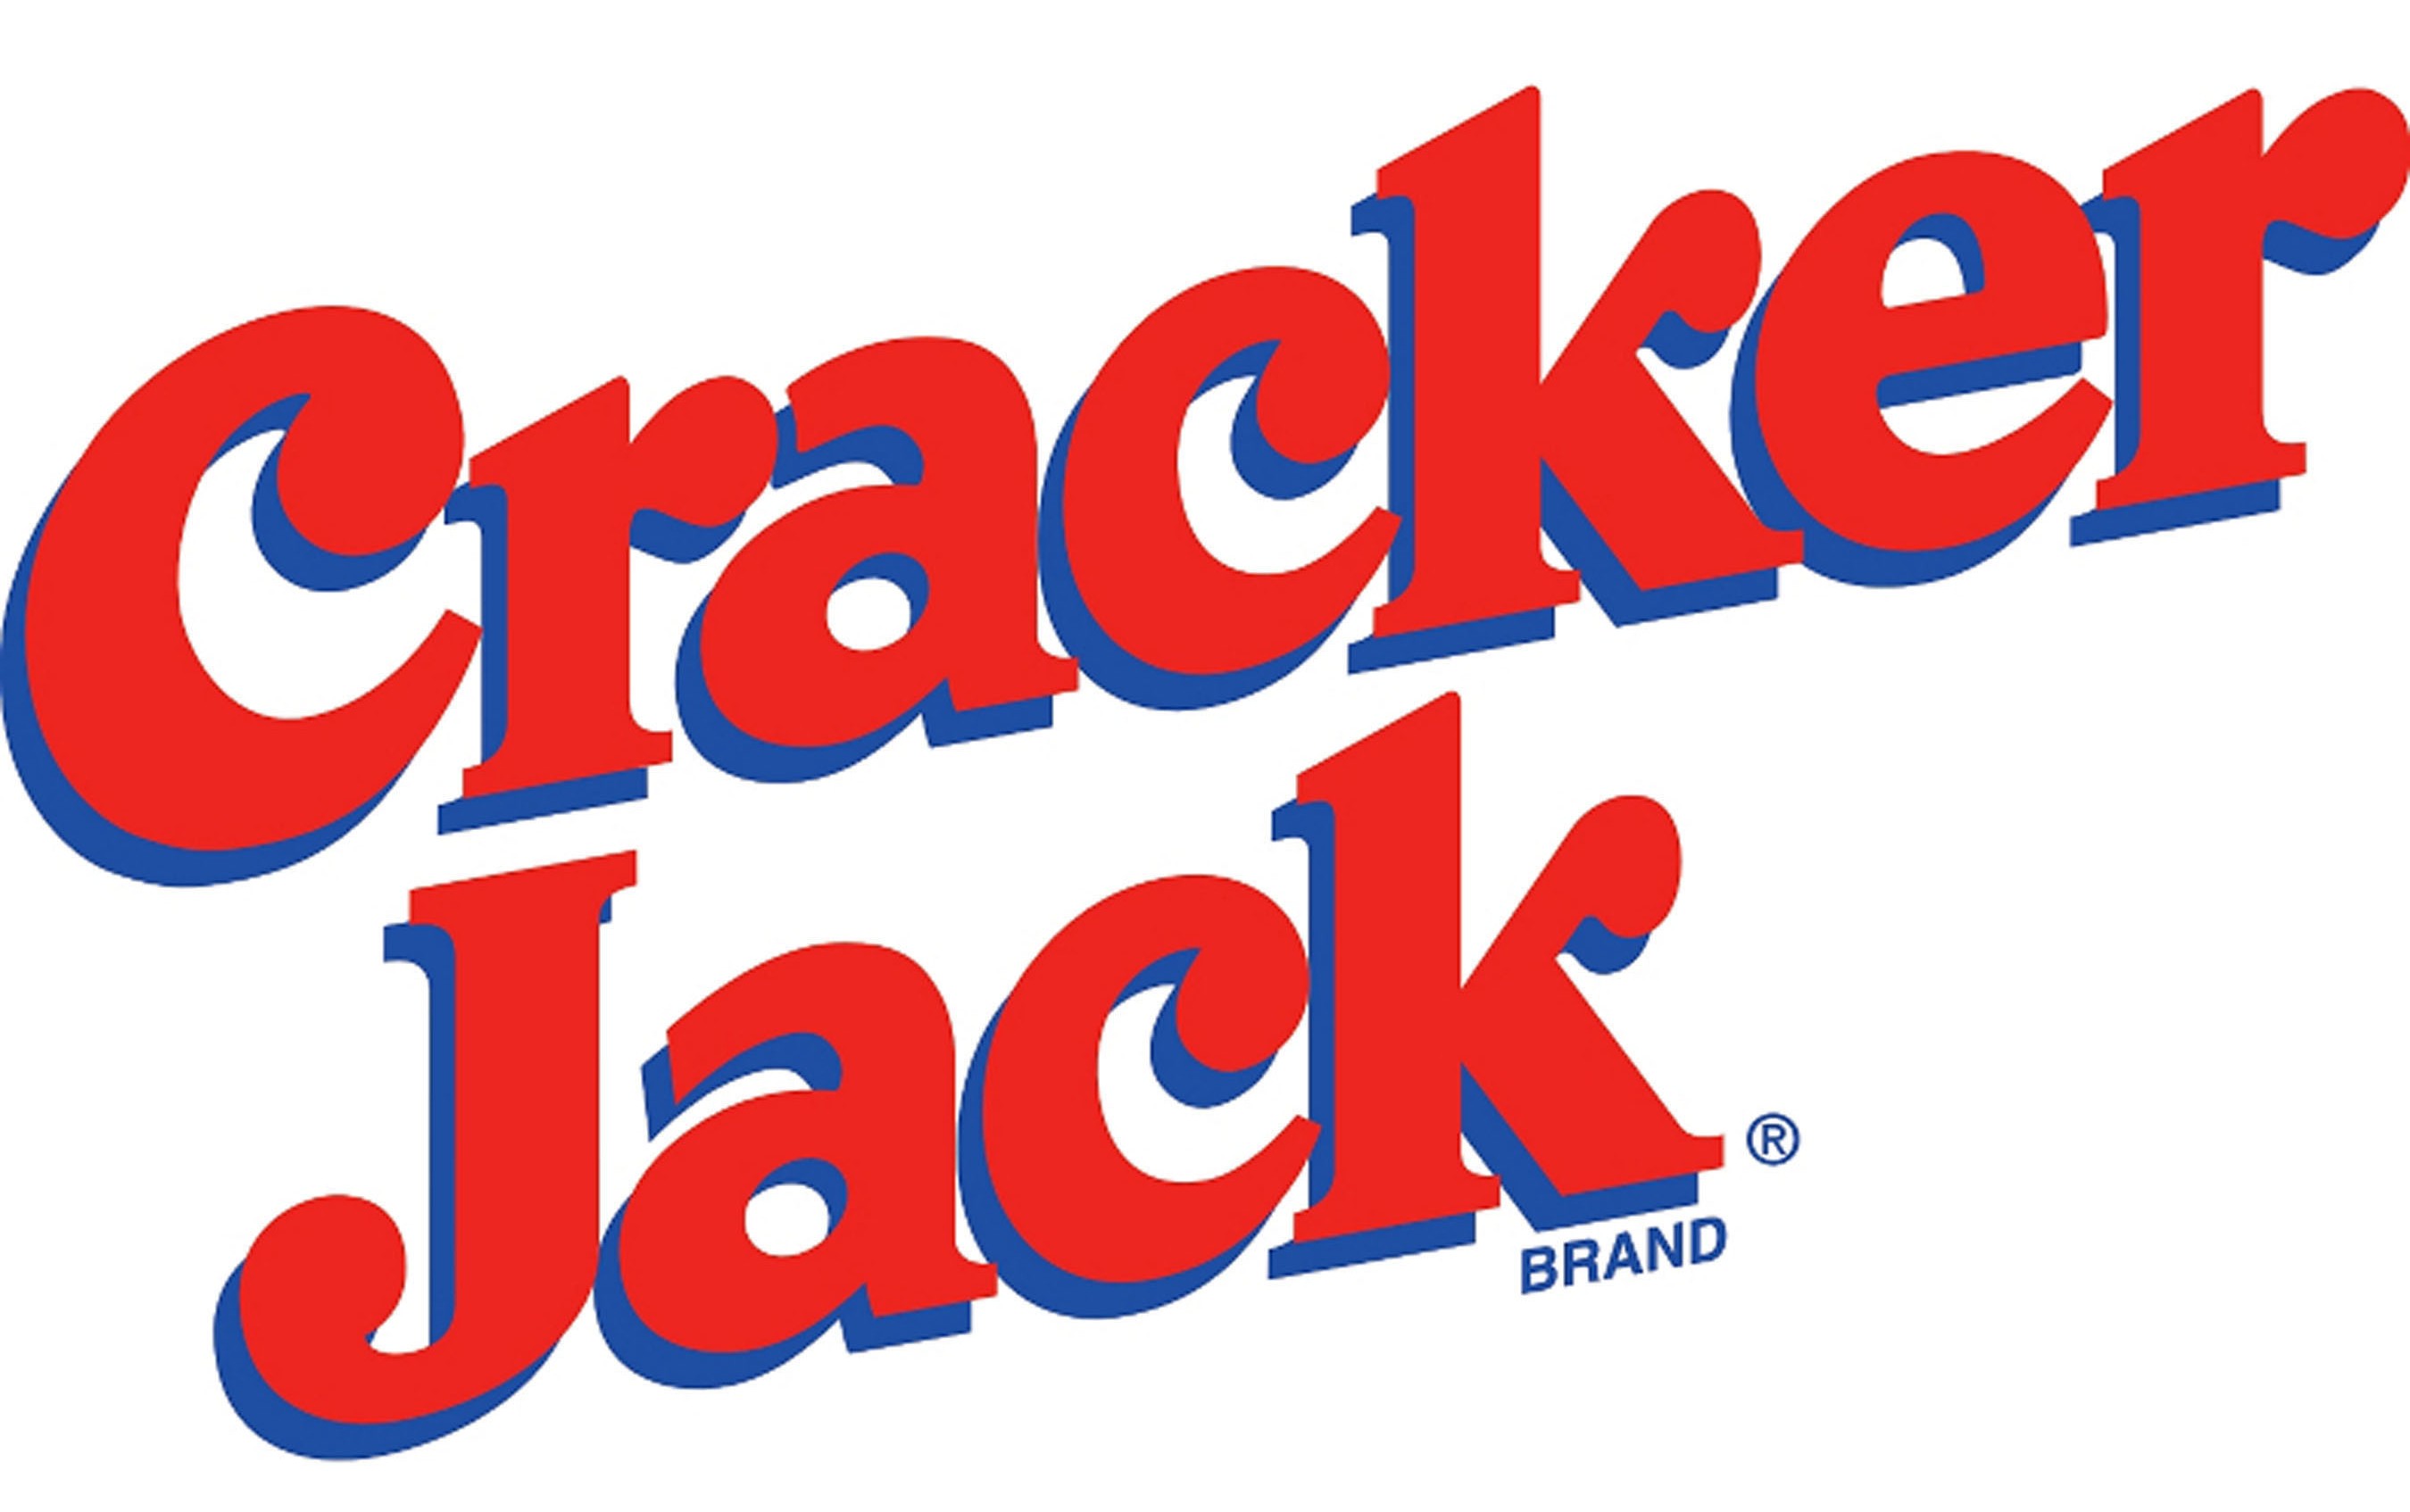 Cracker Jack logo